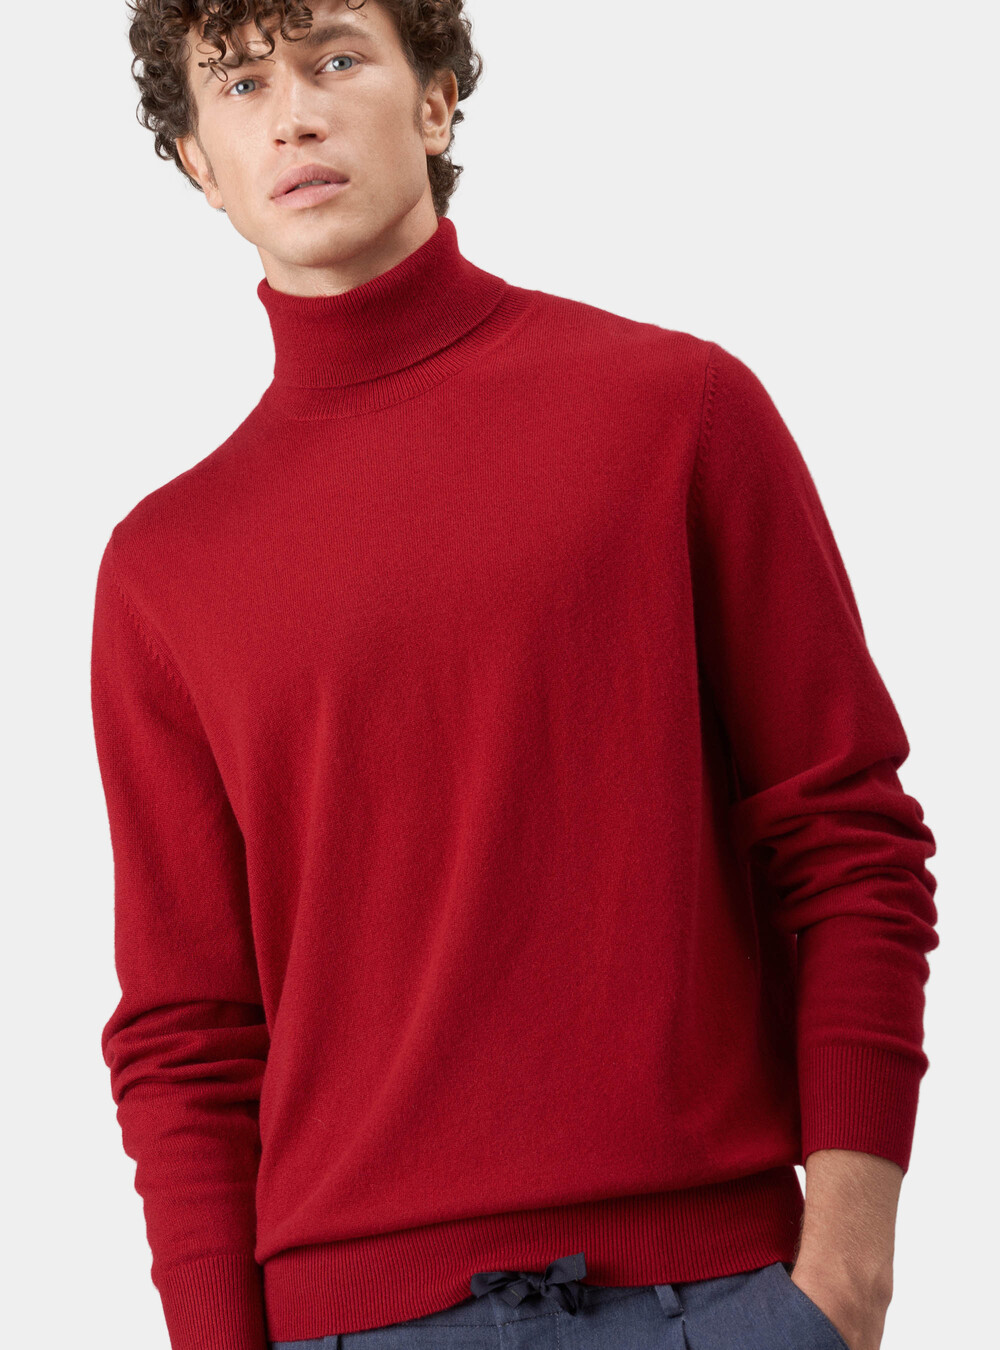 High neck sweater 100% cashmere | GutteridgeEU | Cashmere Selection Uomo